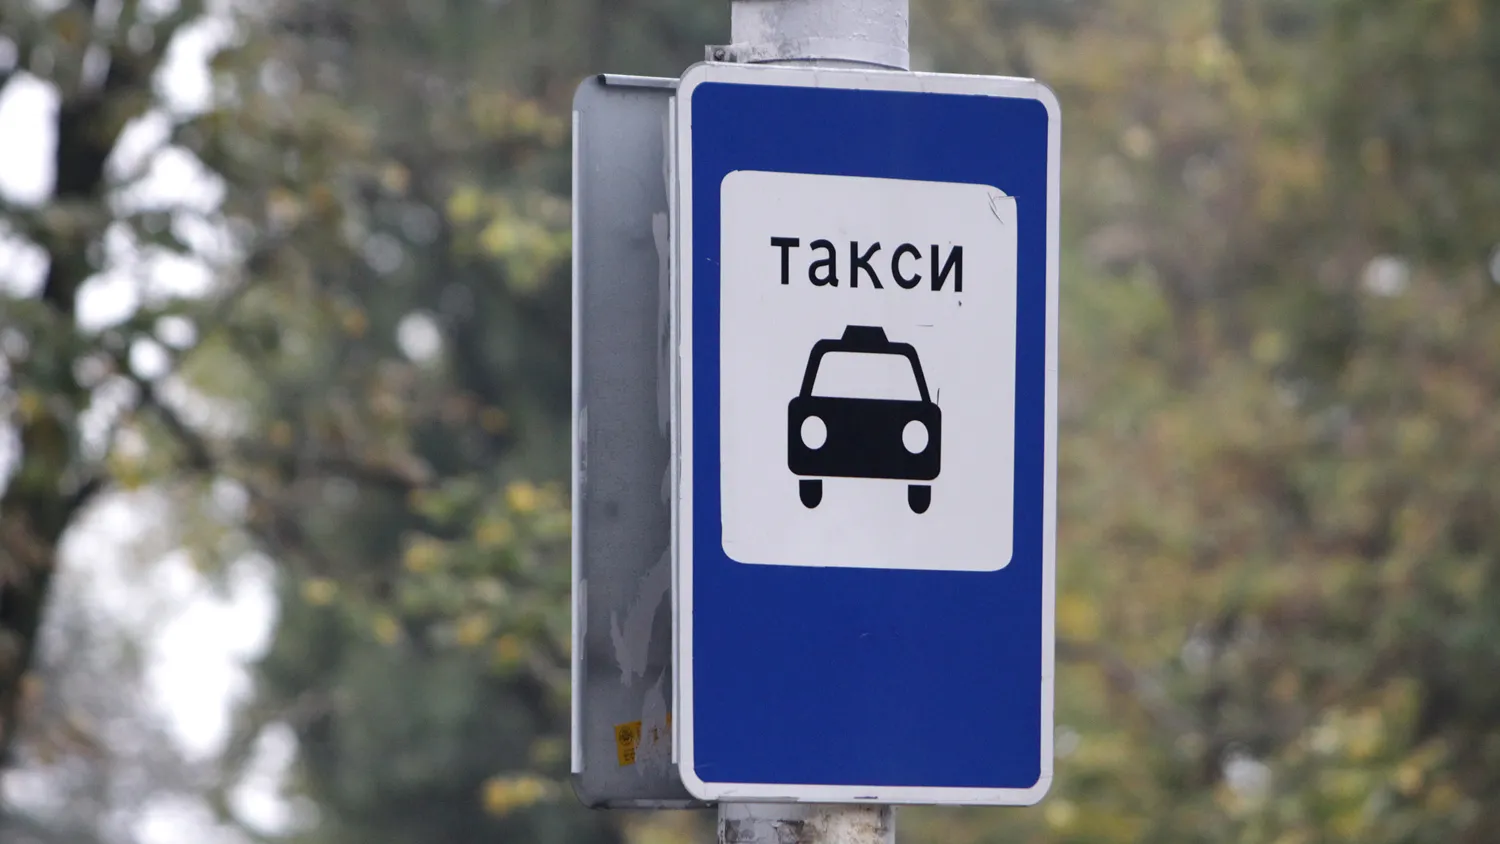 Сервис «Яндекс.Такси» в Петербурге перезапущен